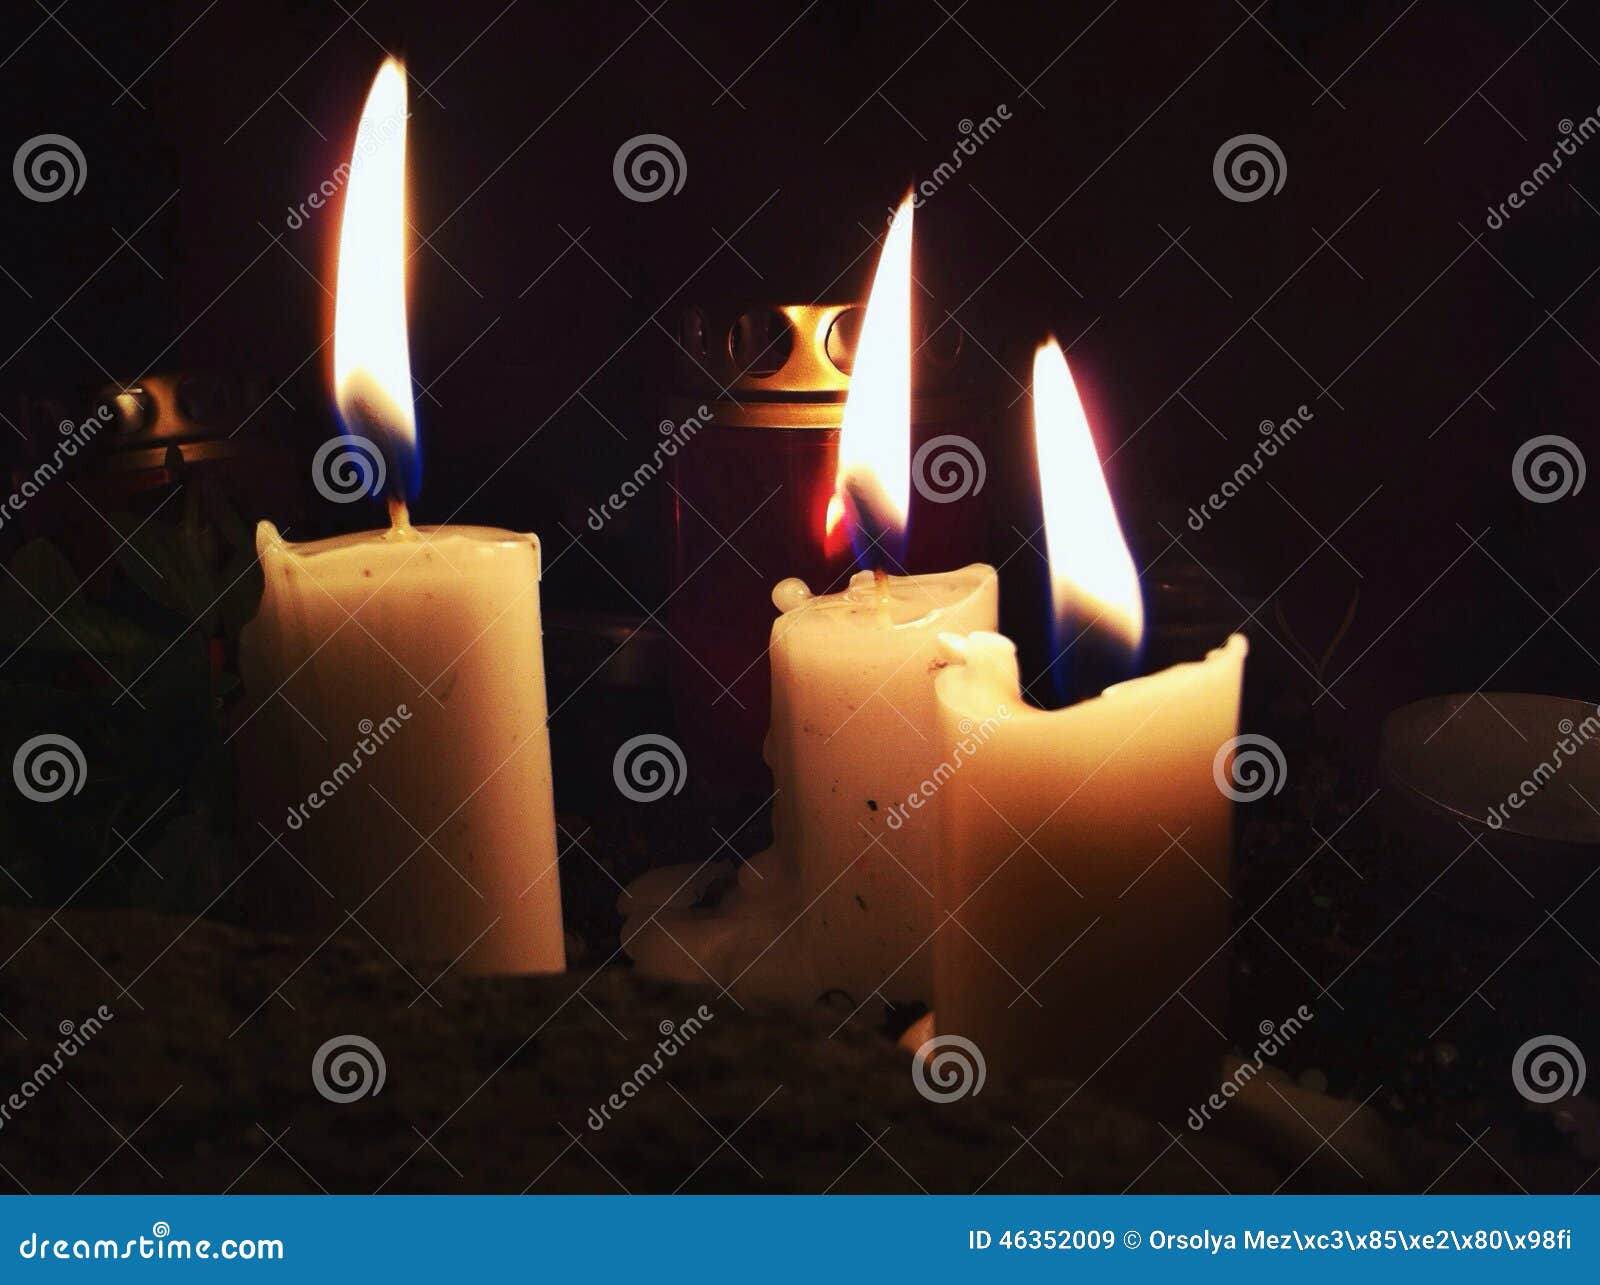 Burning candles stock image. Image of memory, holiday - 46352009